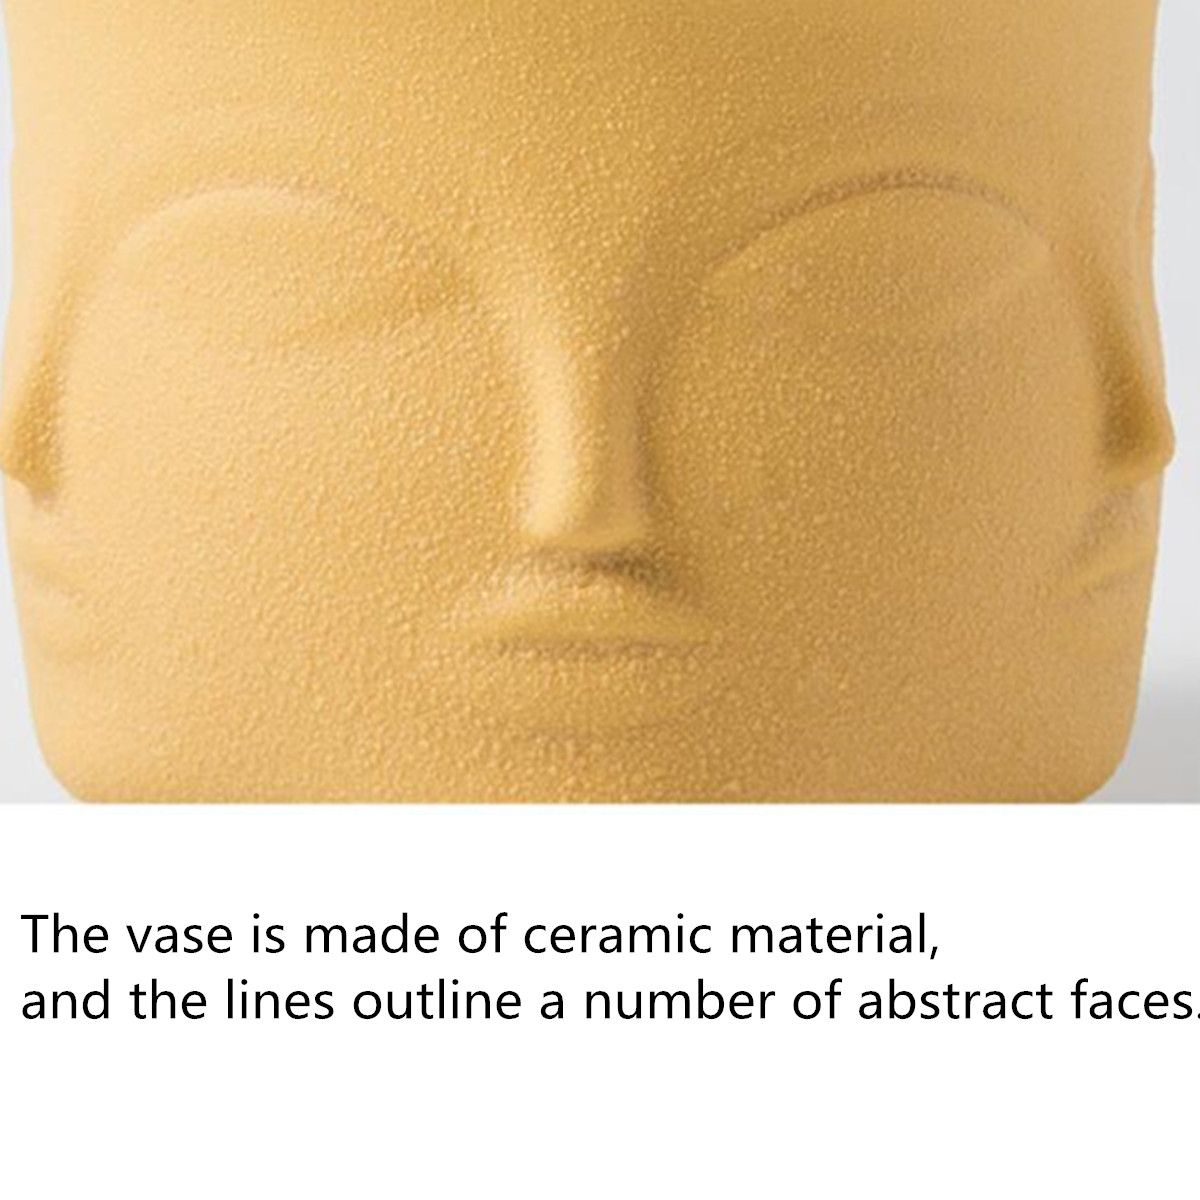 Creative-Ceramic-Face-Flower-Vase-Art-Planter-Pot-Office-Home-Decorations-Holder-1439668